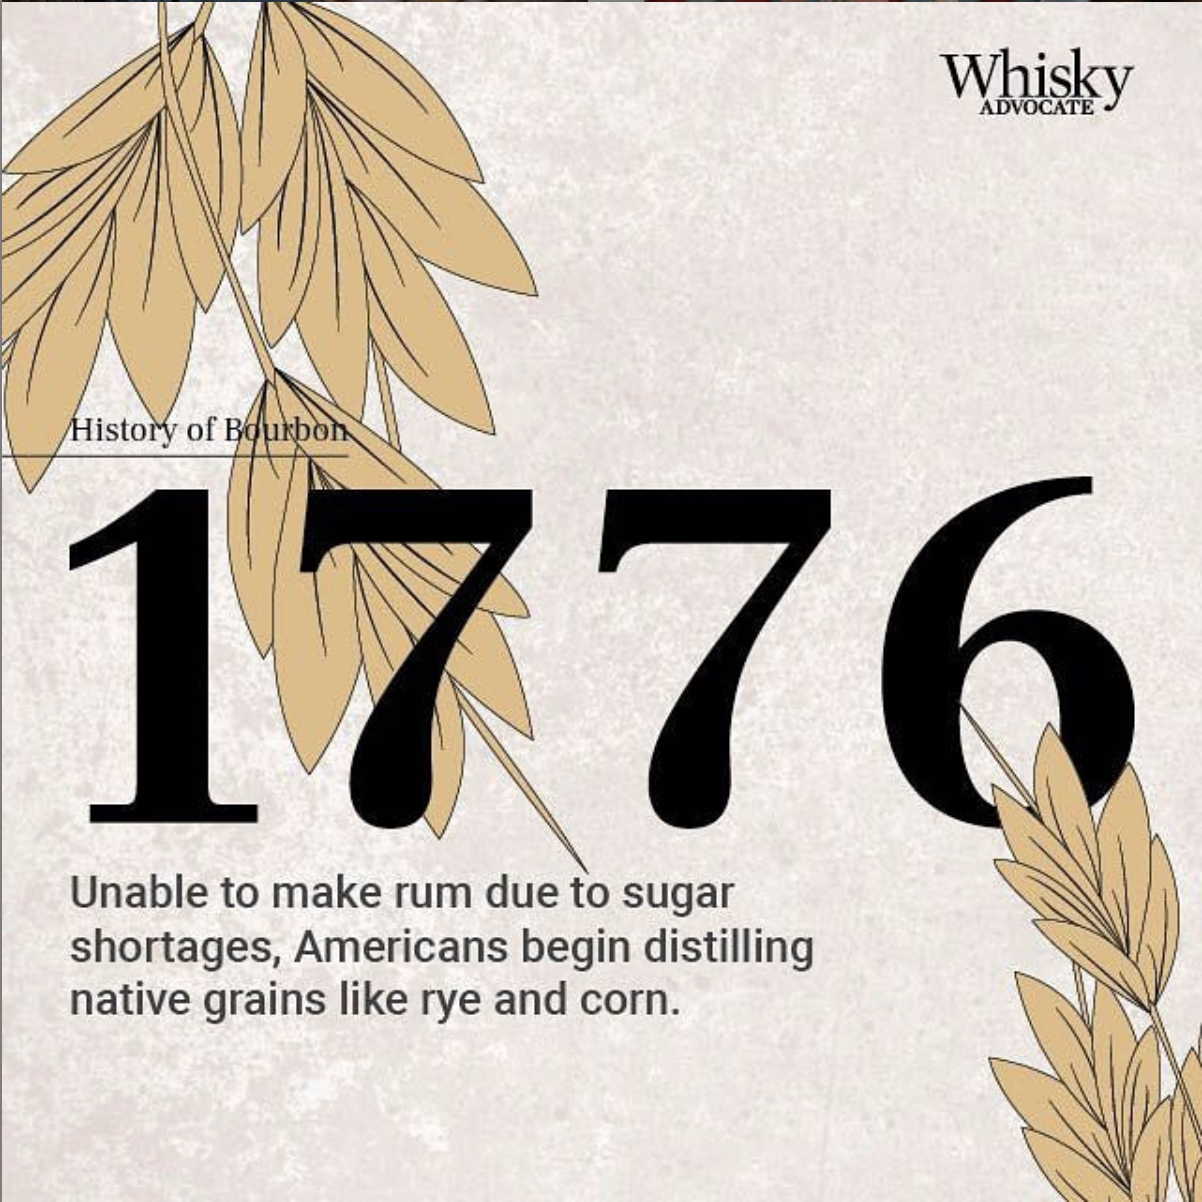 Whisky Advocate Instagram post, 2019